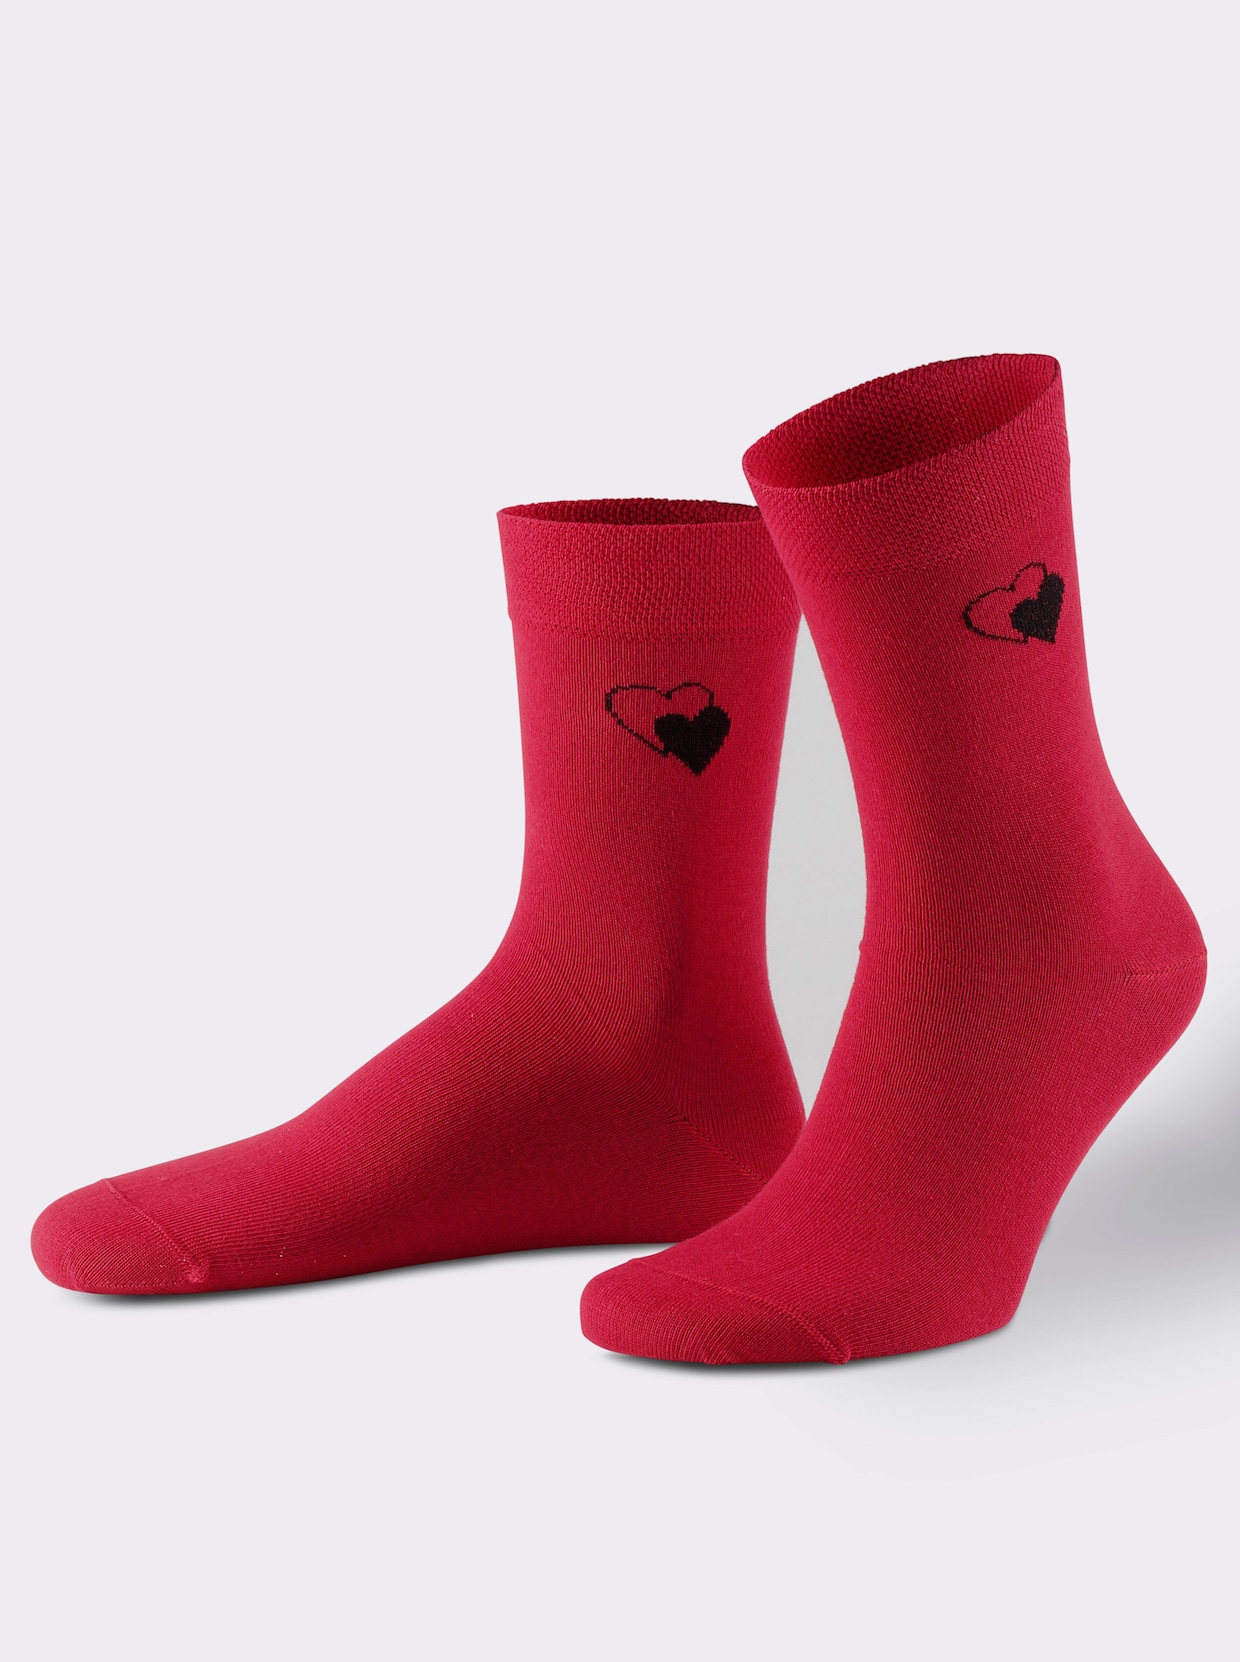 wäschepur Damen-Socken - rot-schwarz-gemustert + rot